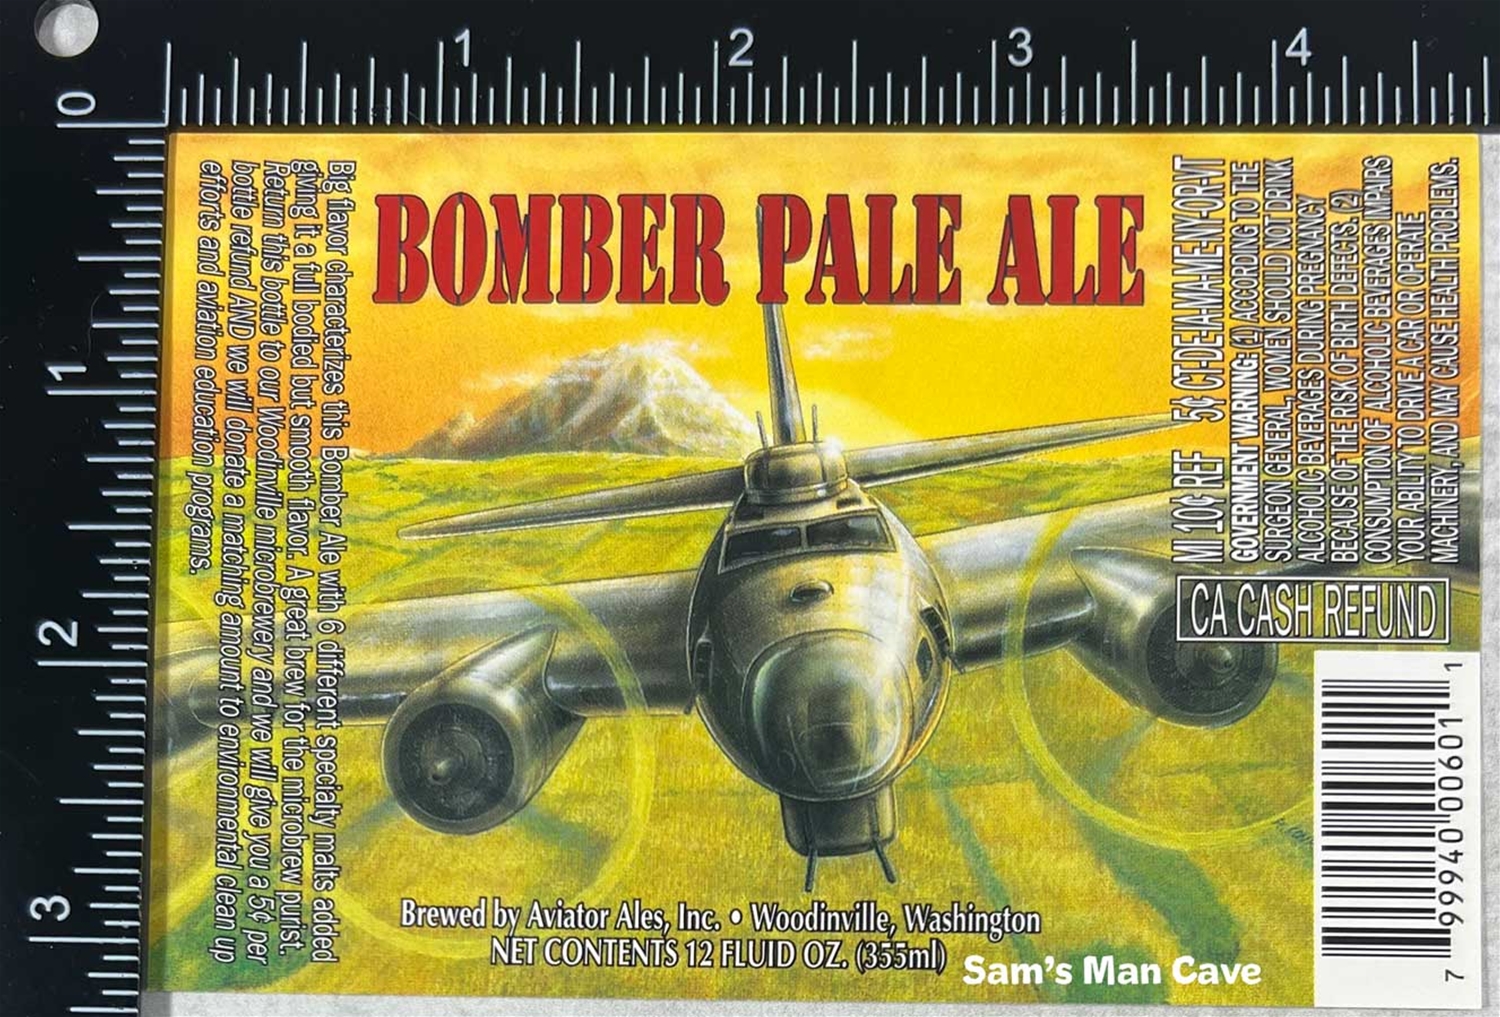 Aviators Ales Bomber Pale Ale Beer Label